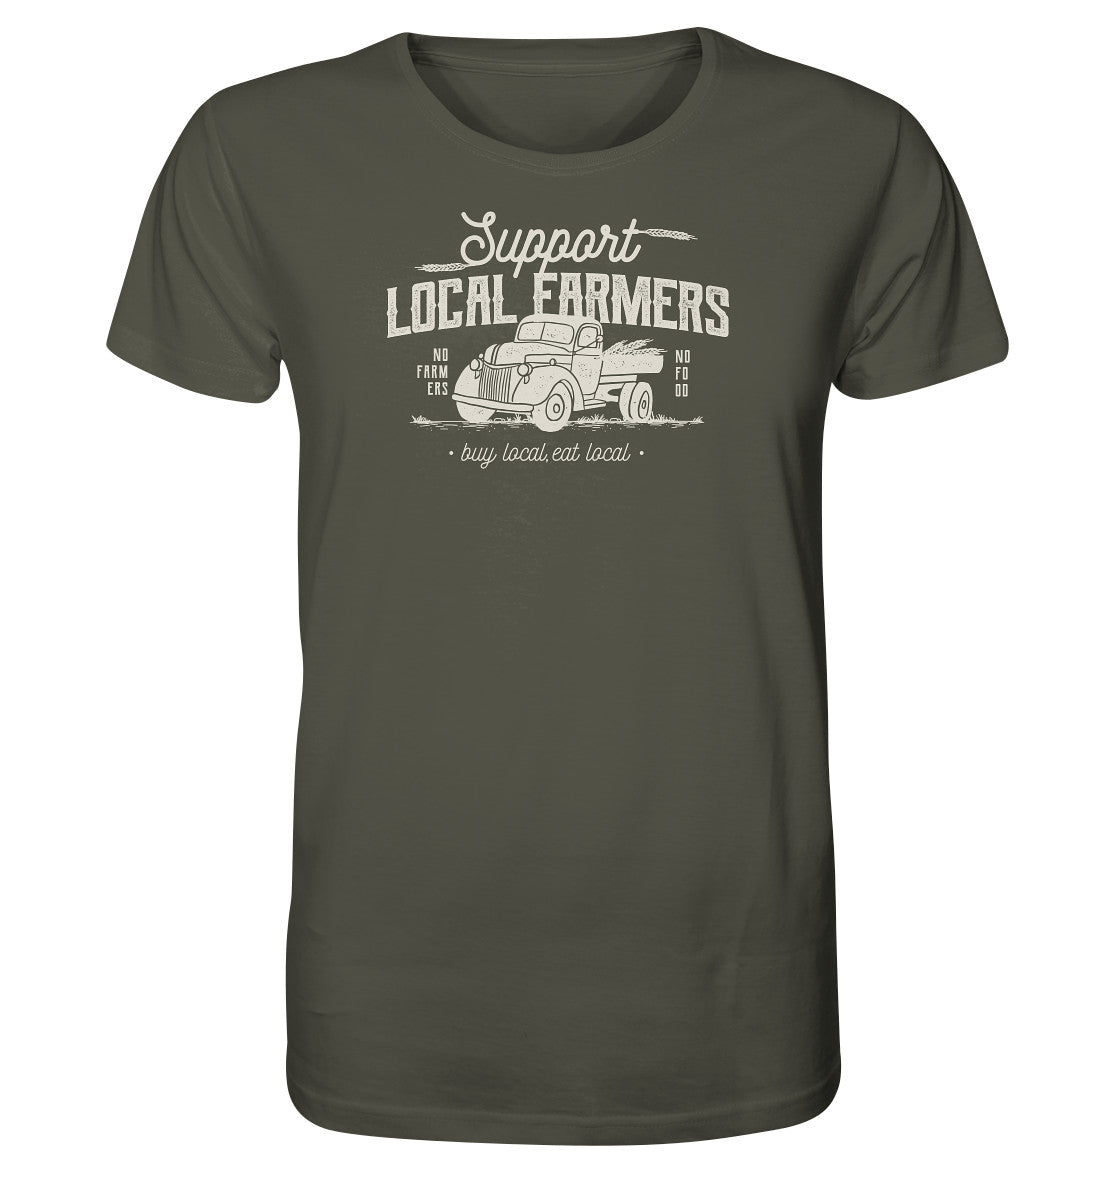 Support local farmer. No farmers no food. Shirt Landwirtschaft. Dorfkram® khaki